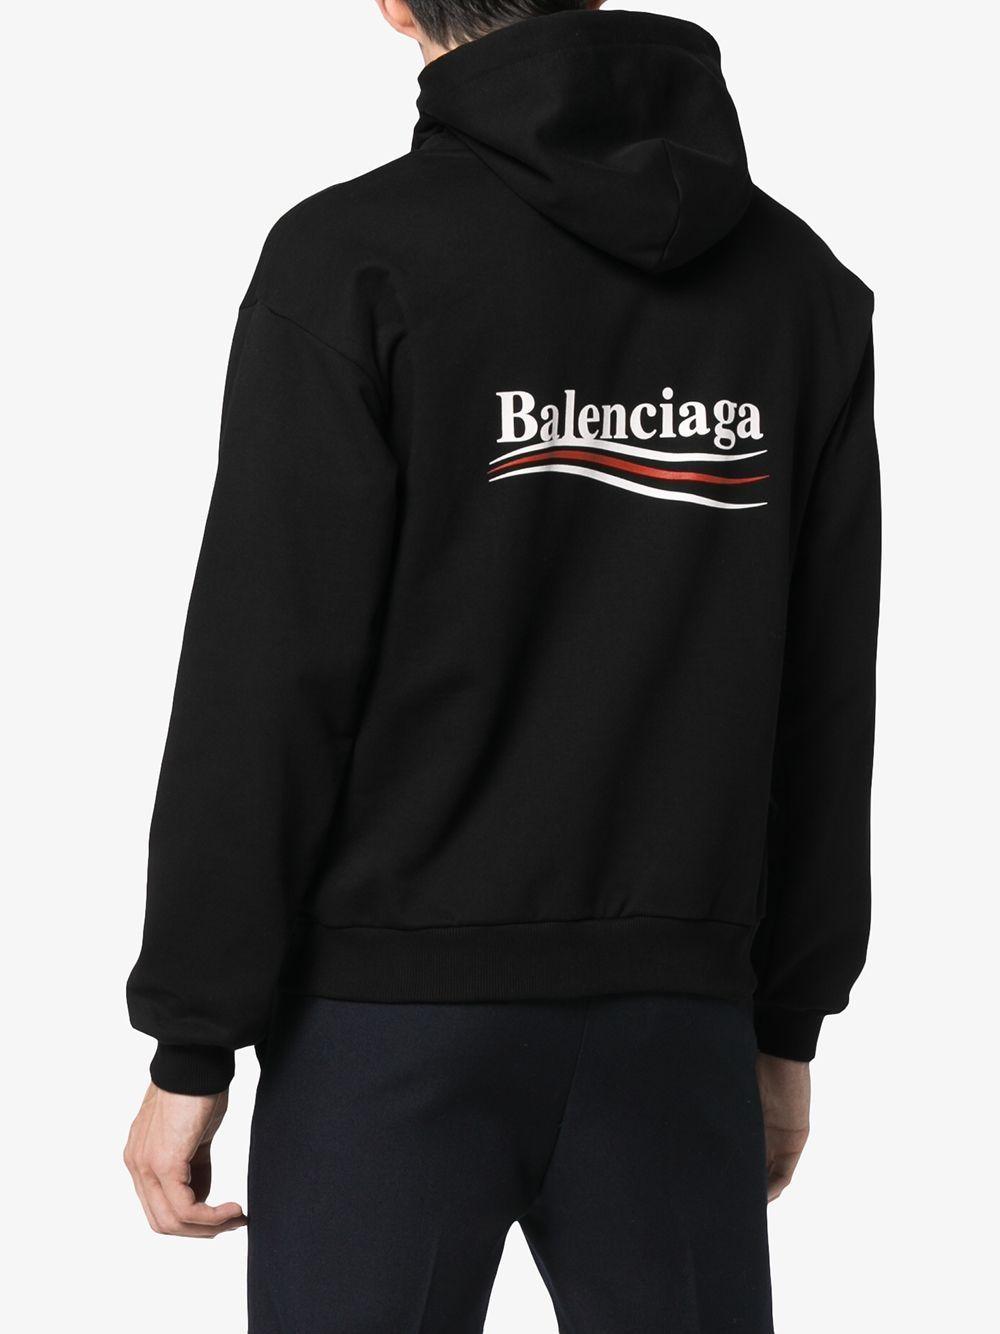 Balenciaga Cotton Political Logo Hoodie in Black for Men - Save 50% | Lyst